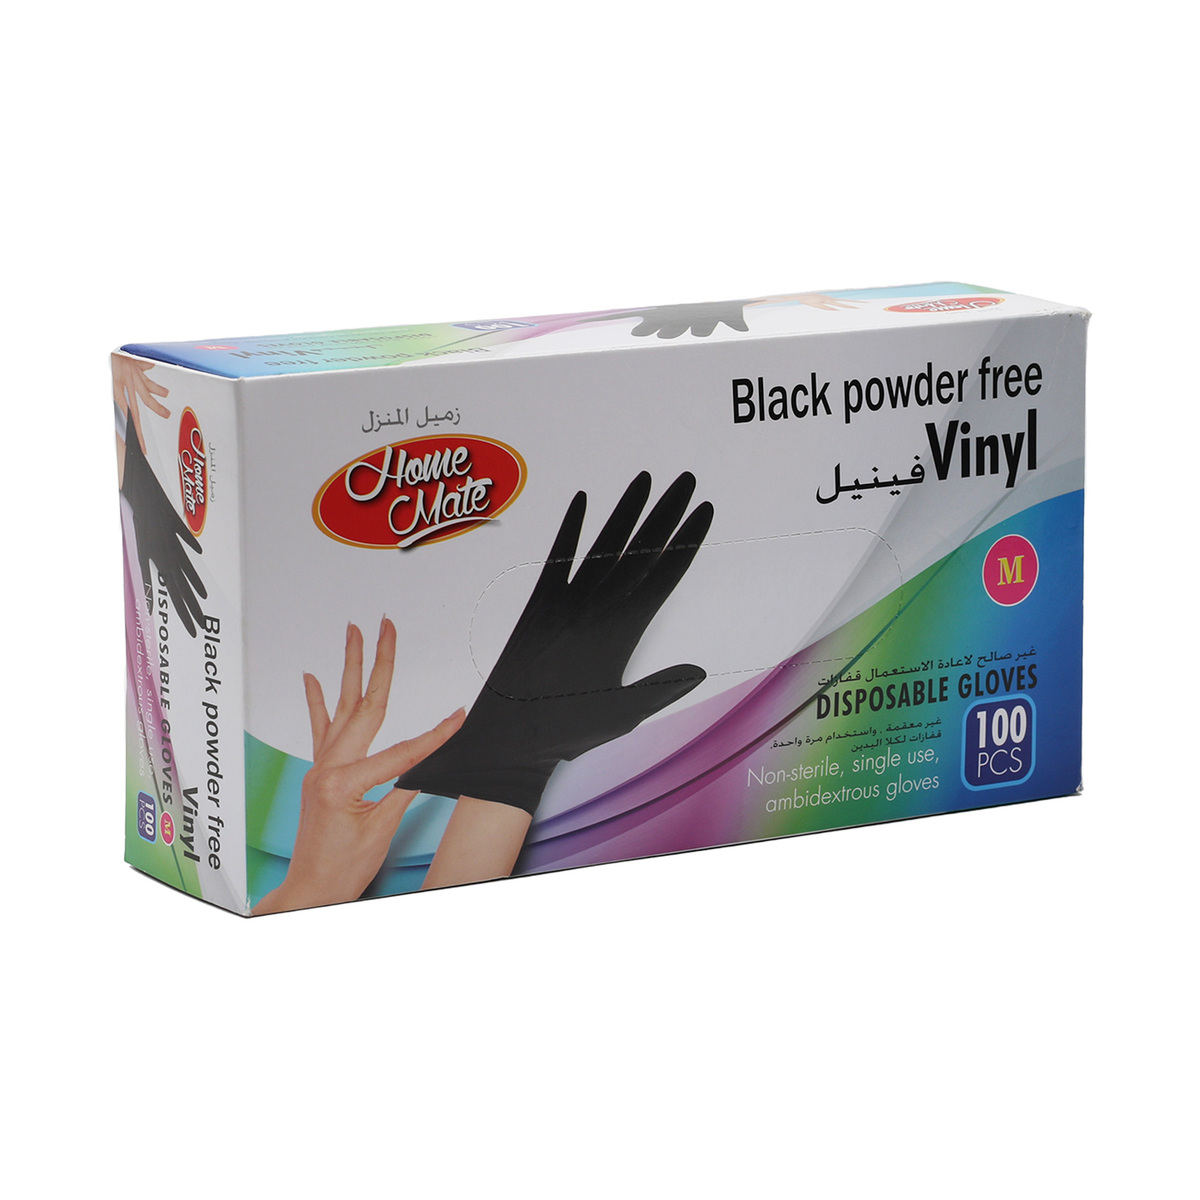 Home Mate Vinyl Gloves Black Powder Free Medium 100pcs